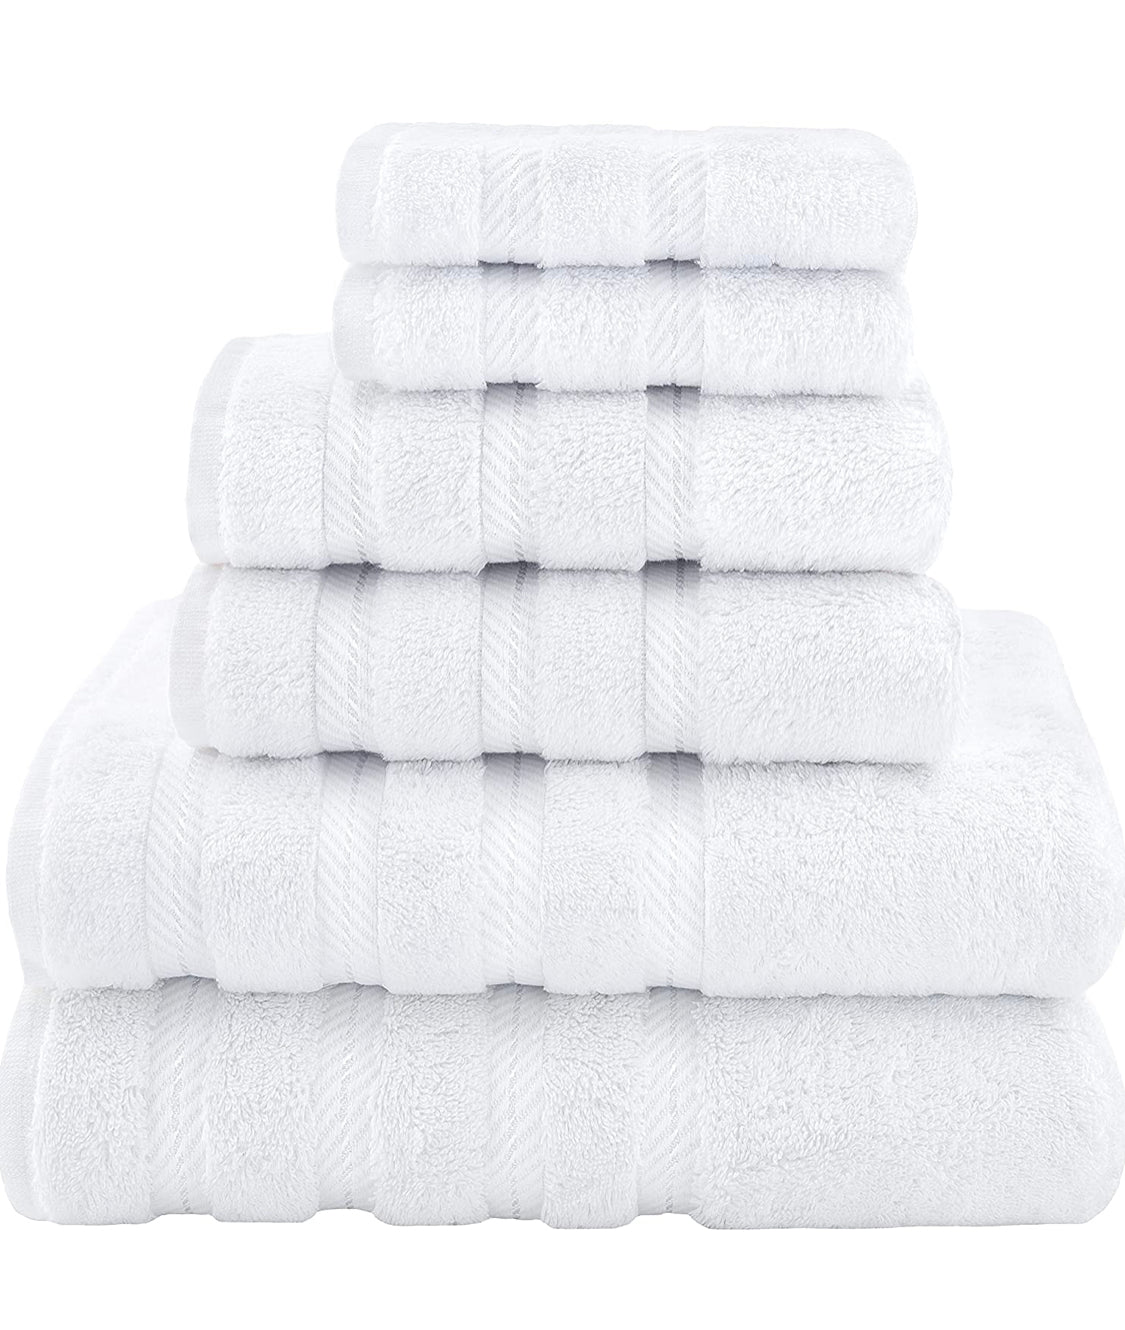 Soft linen towel set